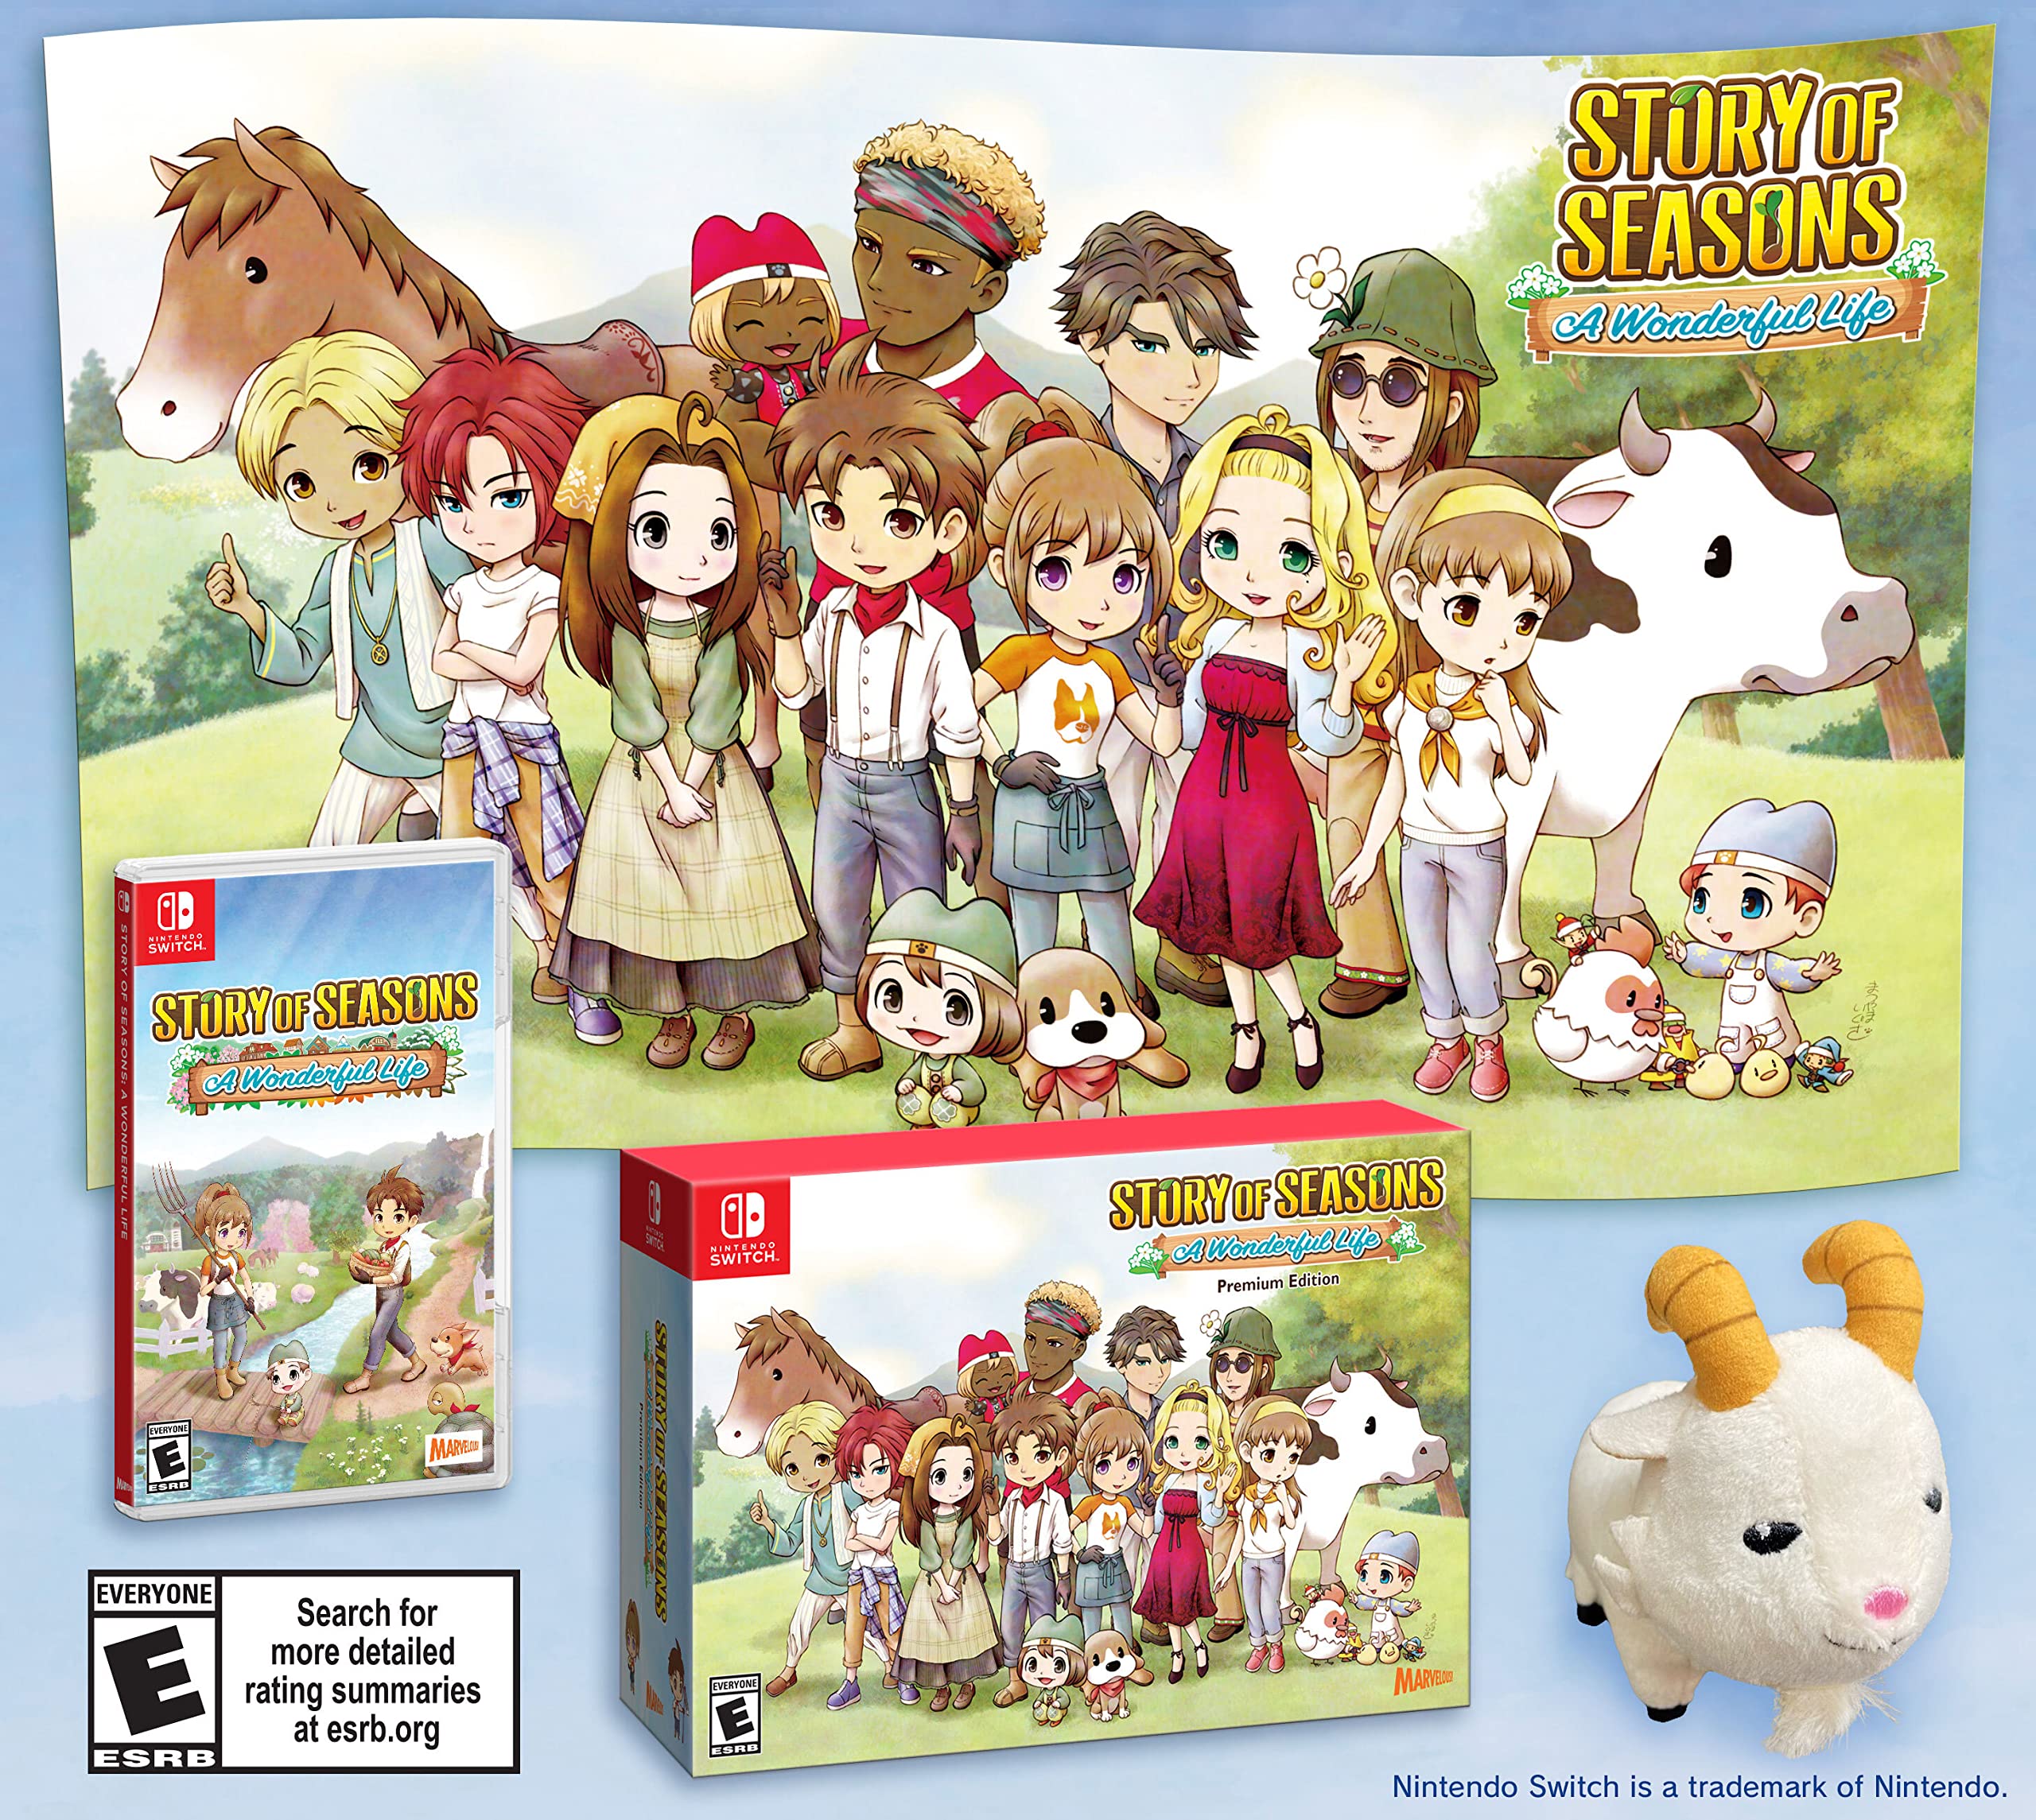 Story of Seasons: A Wonderful Life - Premium Edition - Nintendo Switch